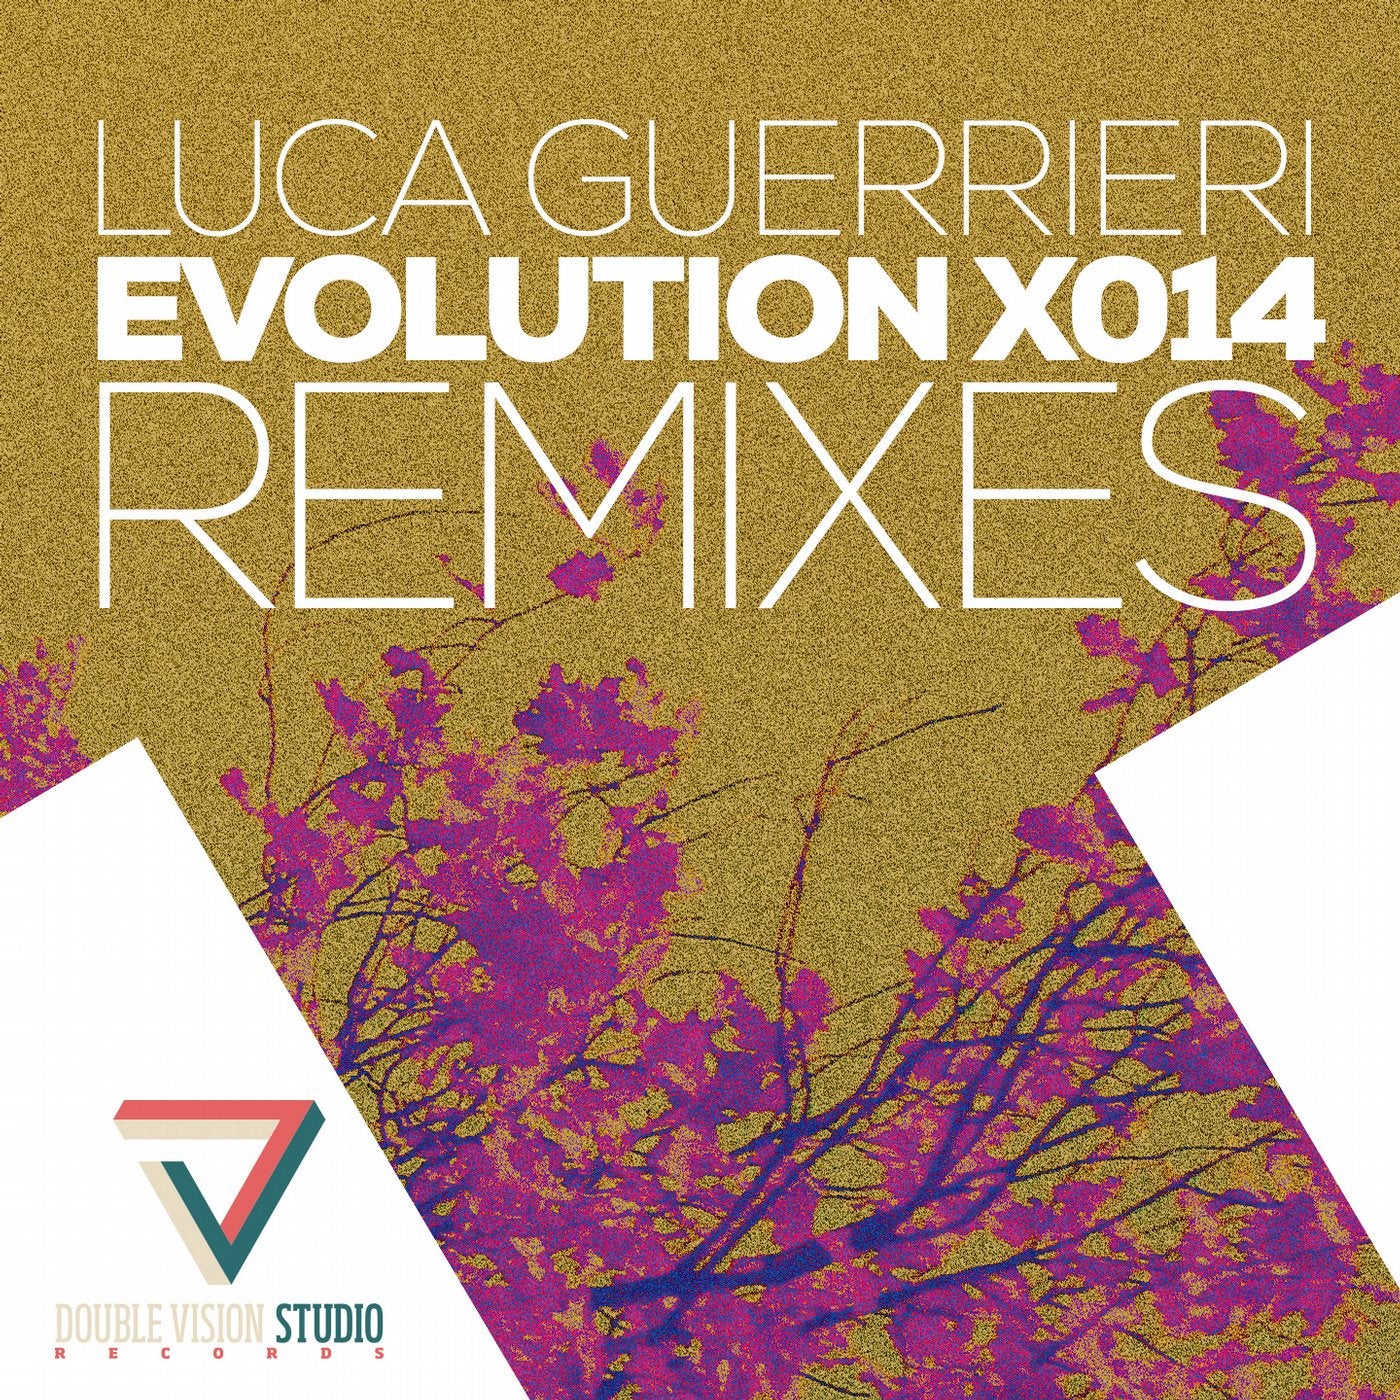 Evolution X014 Remixes